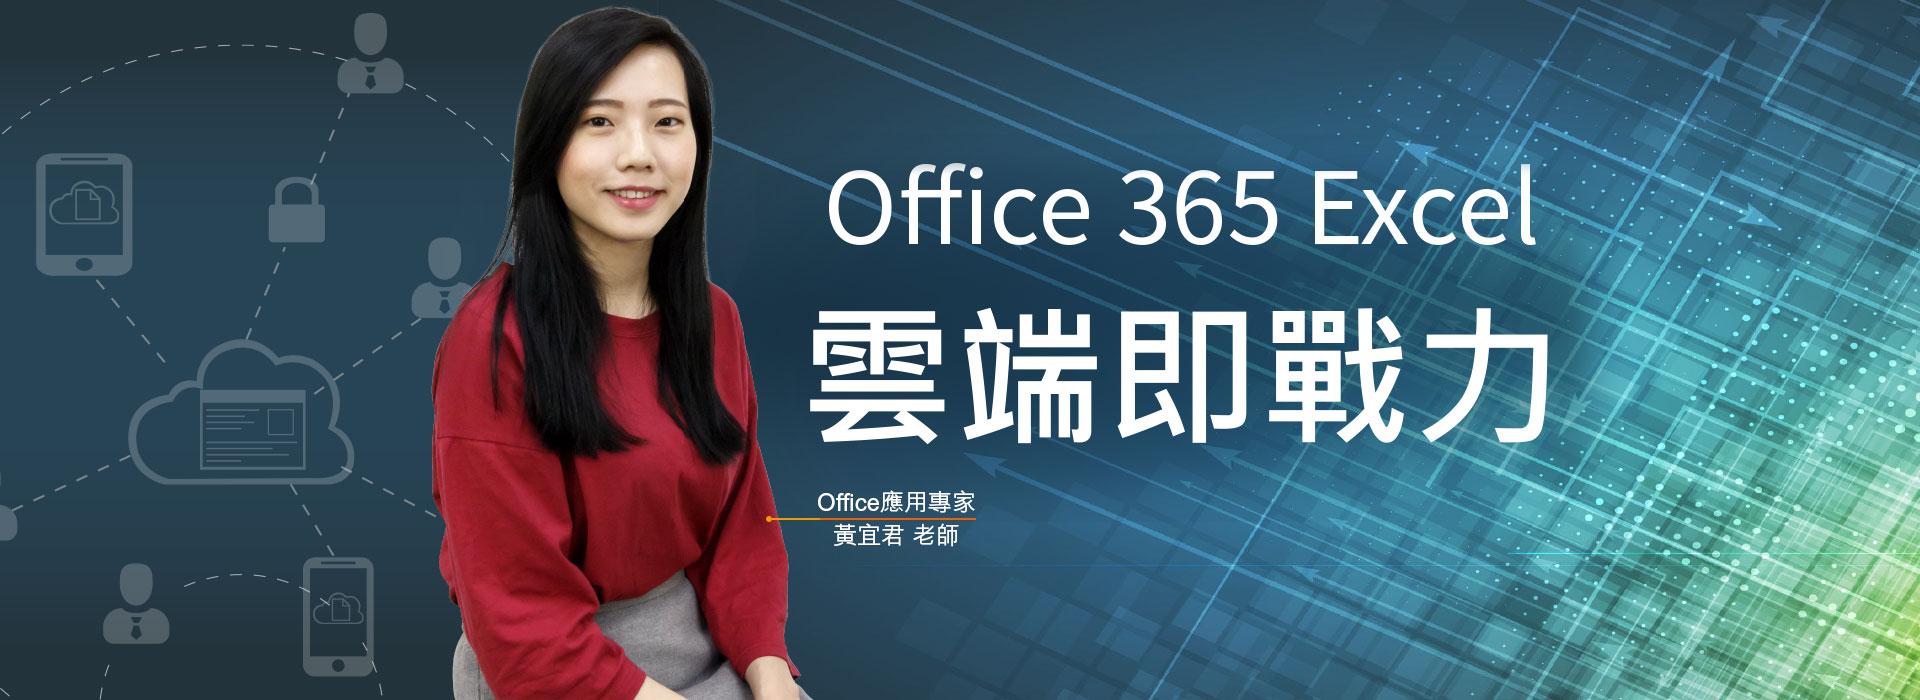 Office 365 Excel 雲端即戰力